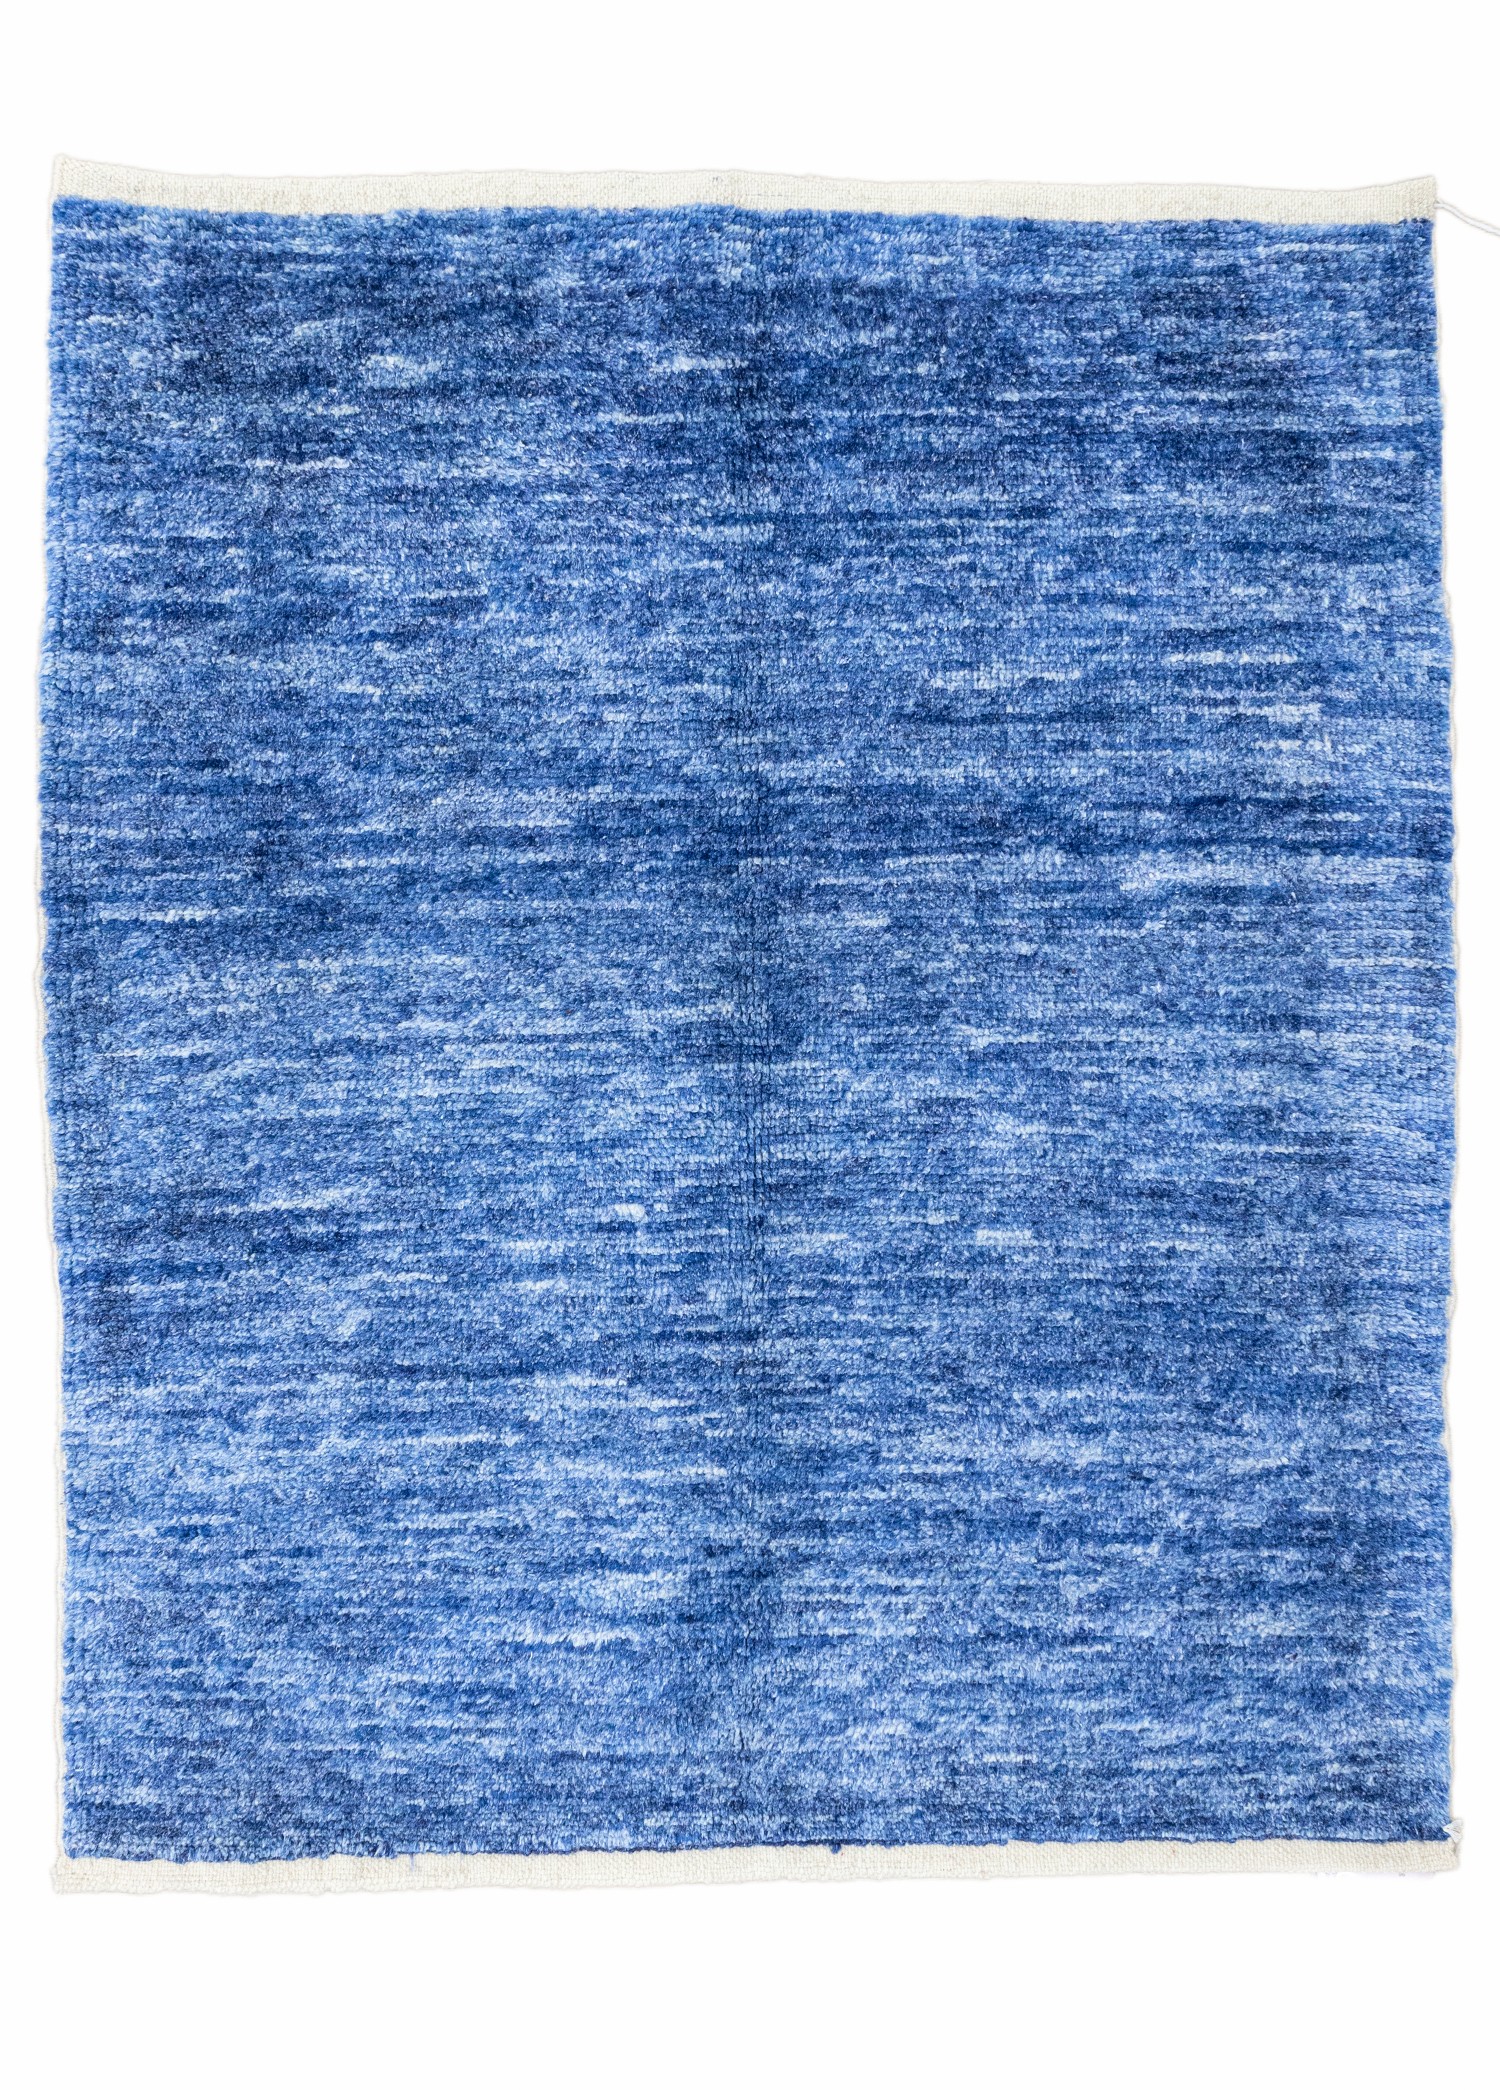 Kaunos Hand-Woven Blue Hemp Rug 104x114 cm